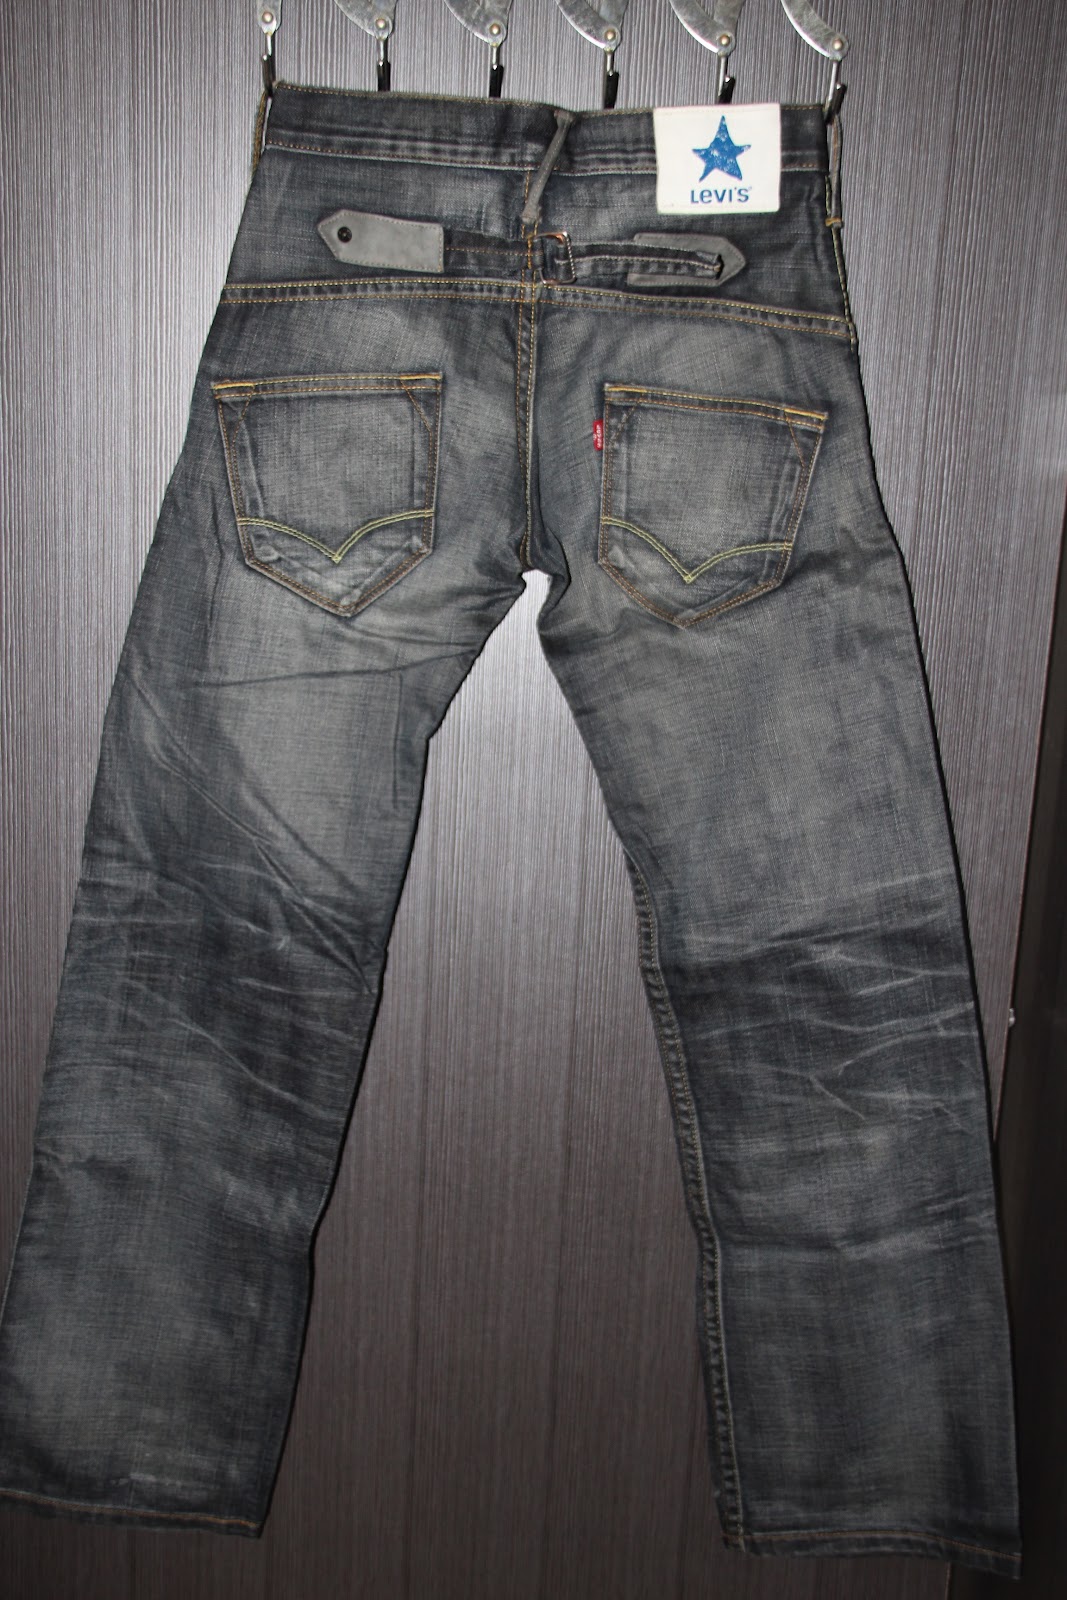 levis blue star jeans